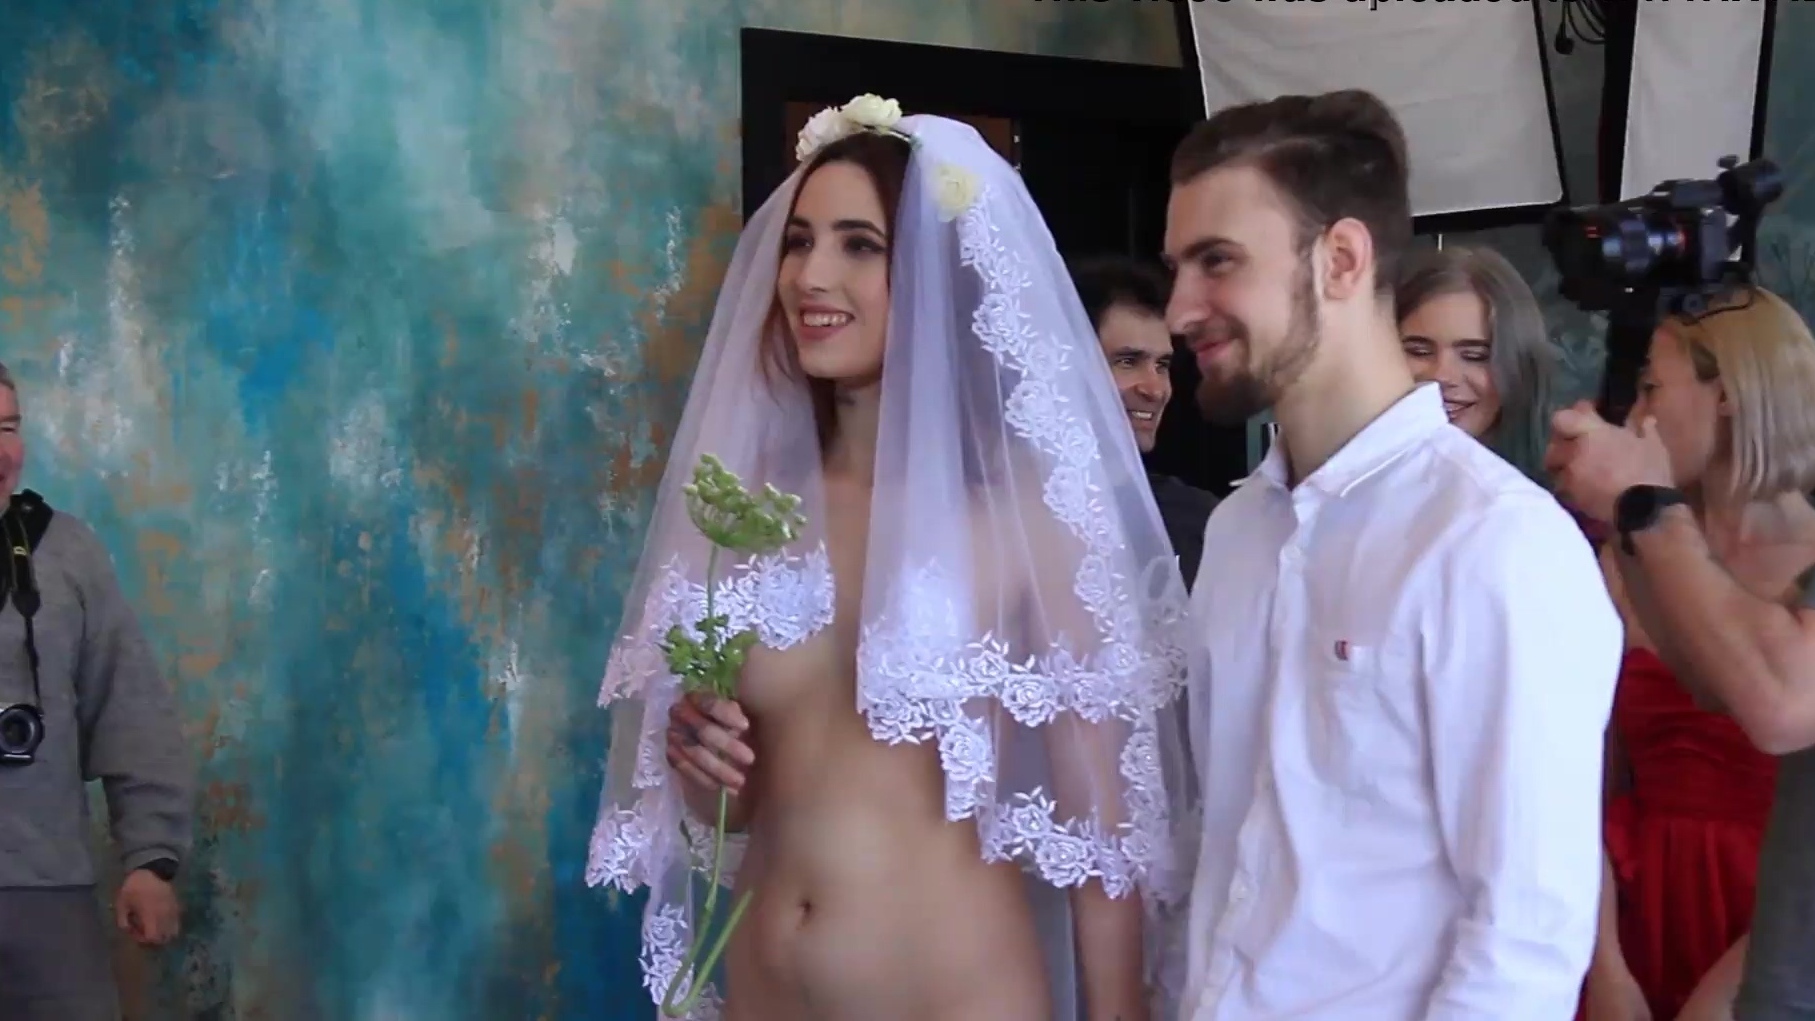 man russian brides scam homemade porn